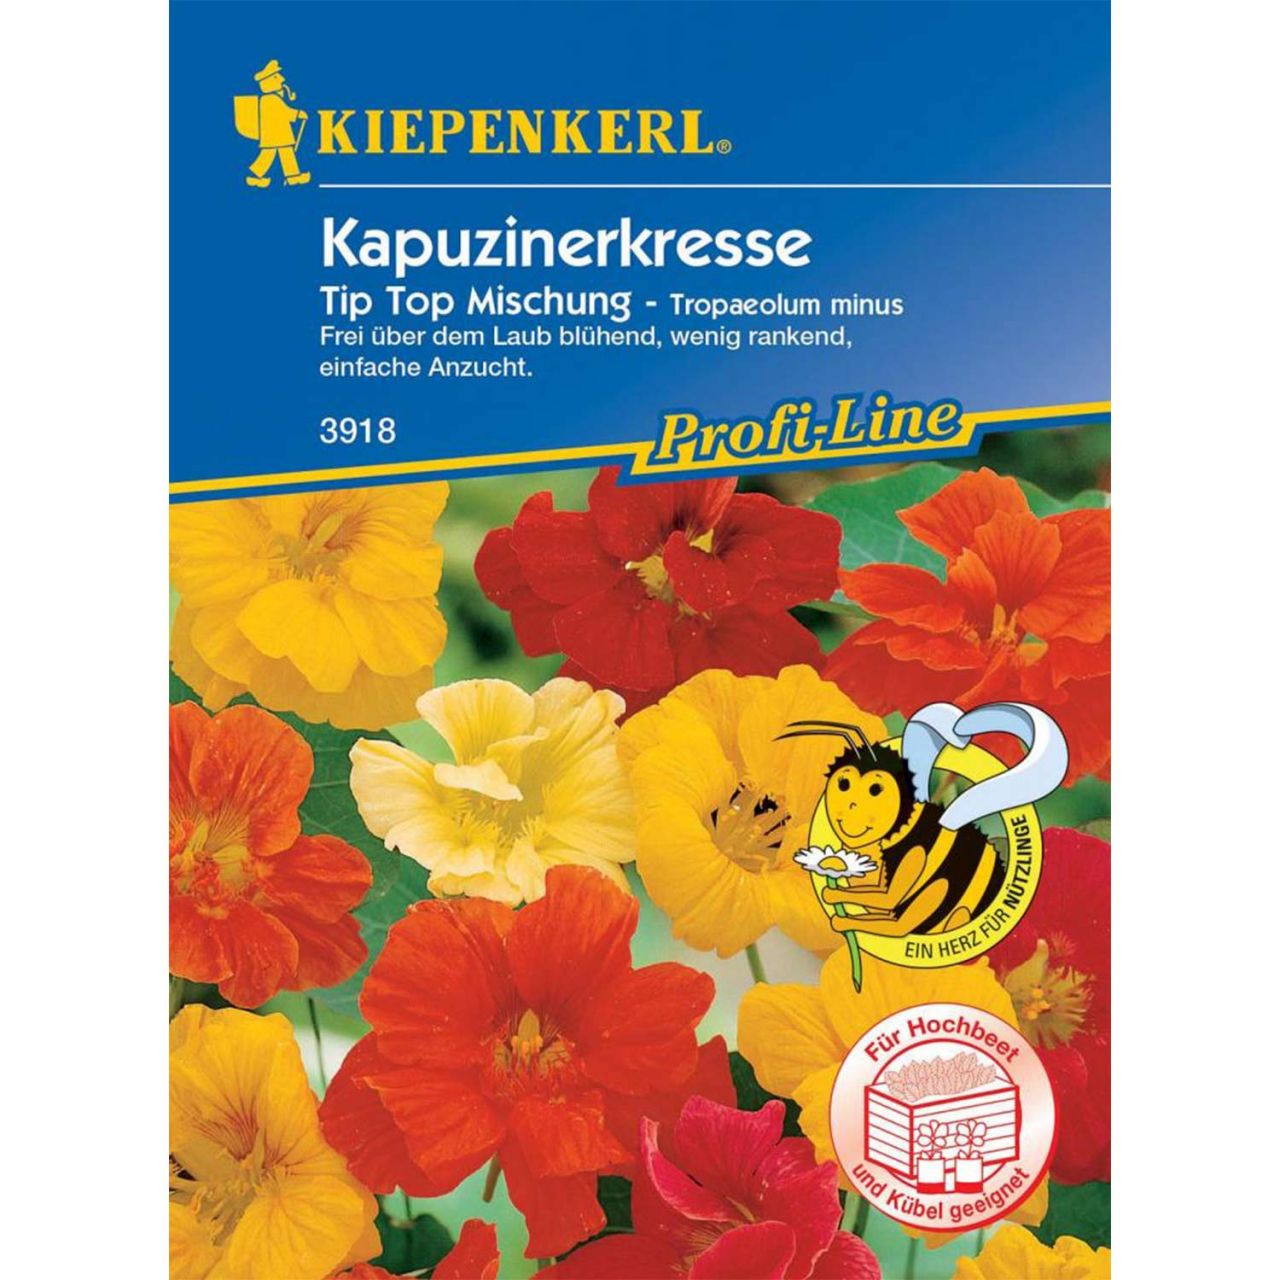 Kategorie <b>Blumensamen </b> - Kapuzinerkresse 'Tip Top Mischung' - Tropaeolum minus